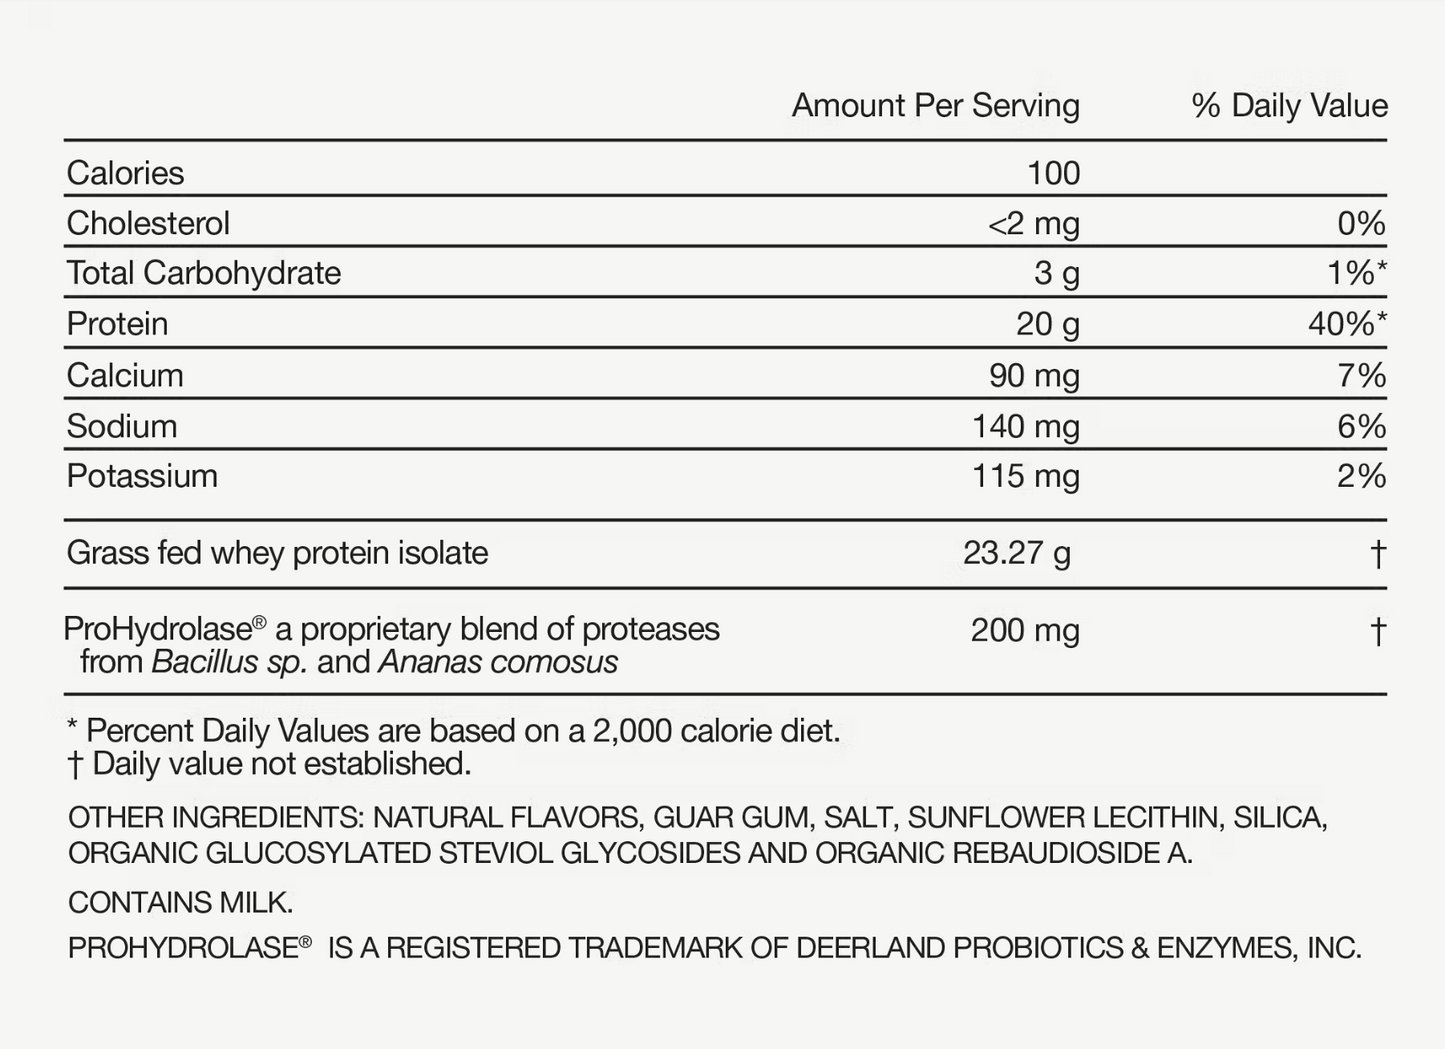 Momentous Essential Grass-Fed Whey Protein Powder